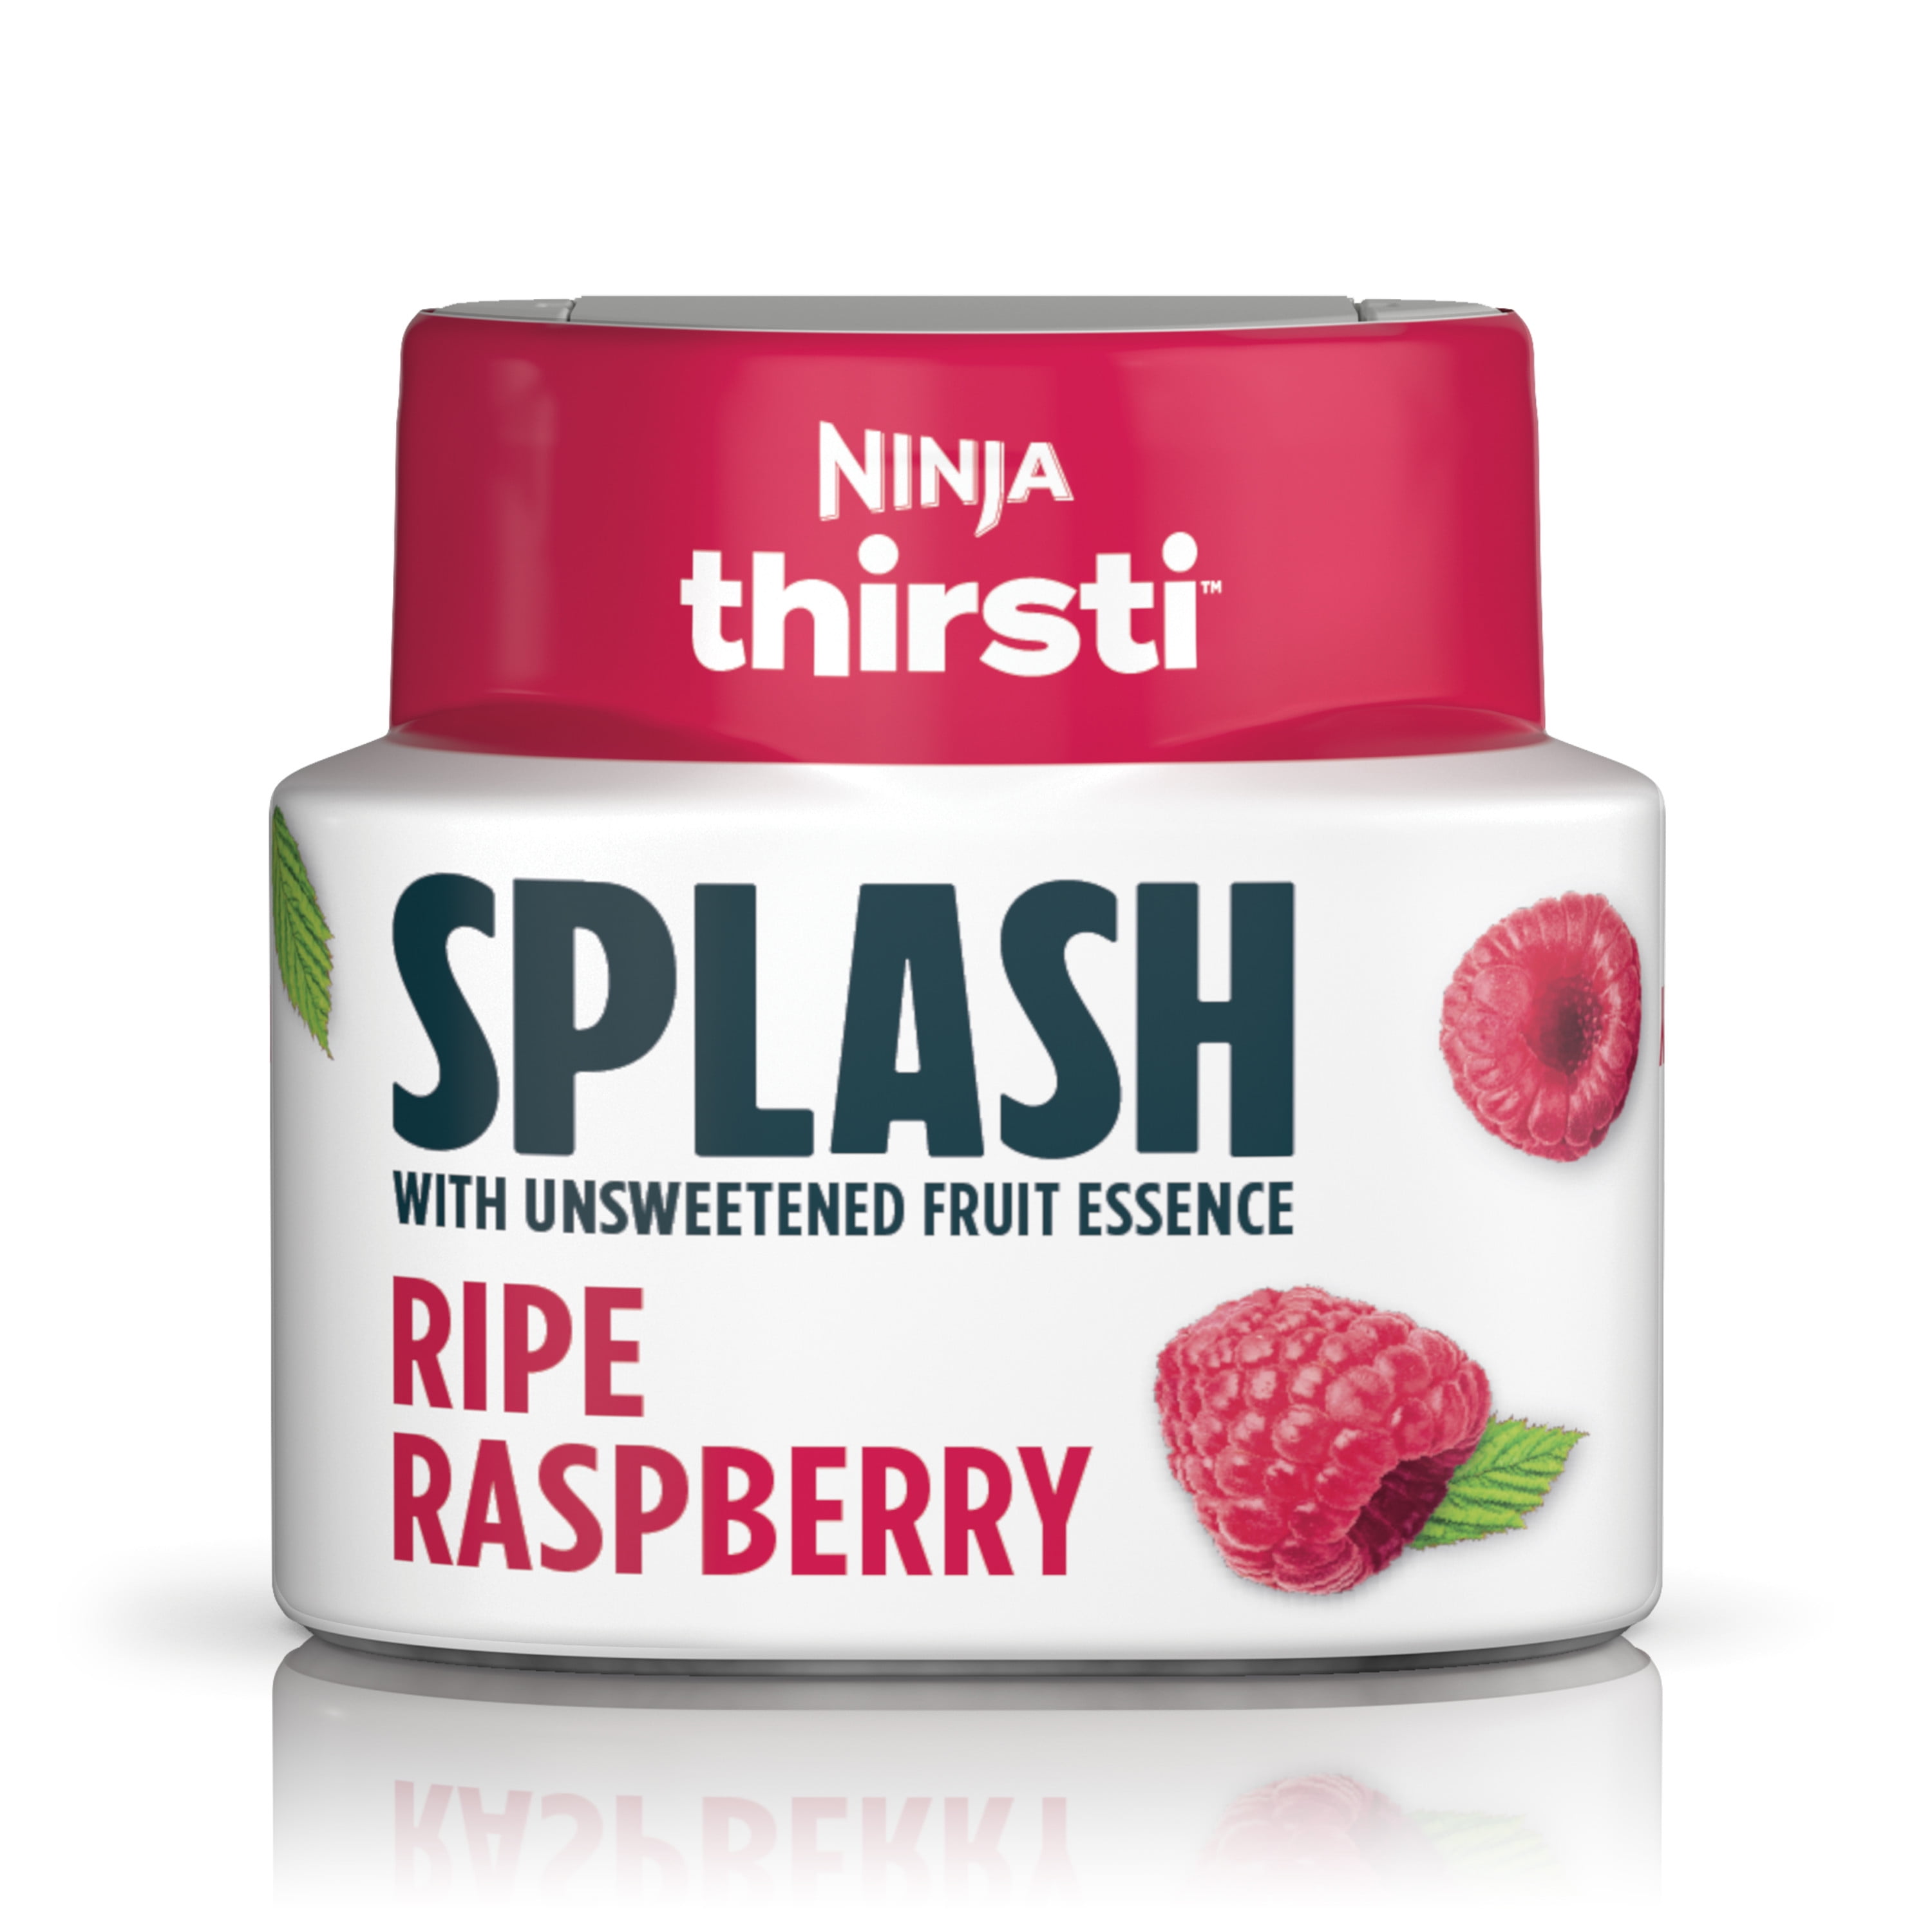 Ninja Thirsti Flavored Water Drops, VITAMINS With Vitamins B3, B6, B12,  Mango Peach Punch, 3 Pack, Zero Calories, Zero Sugar, 2.23 Fl Oz, Makes 17